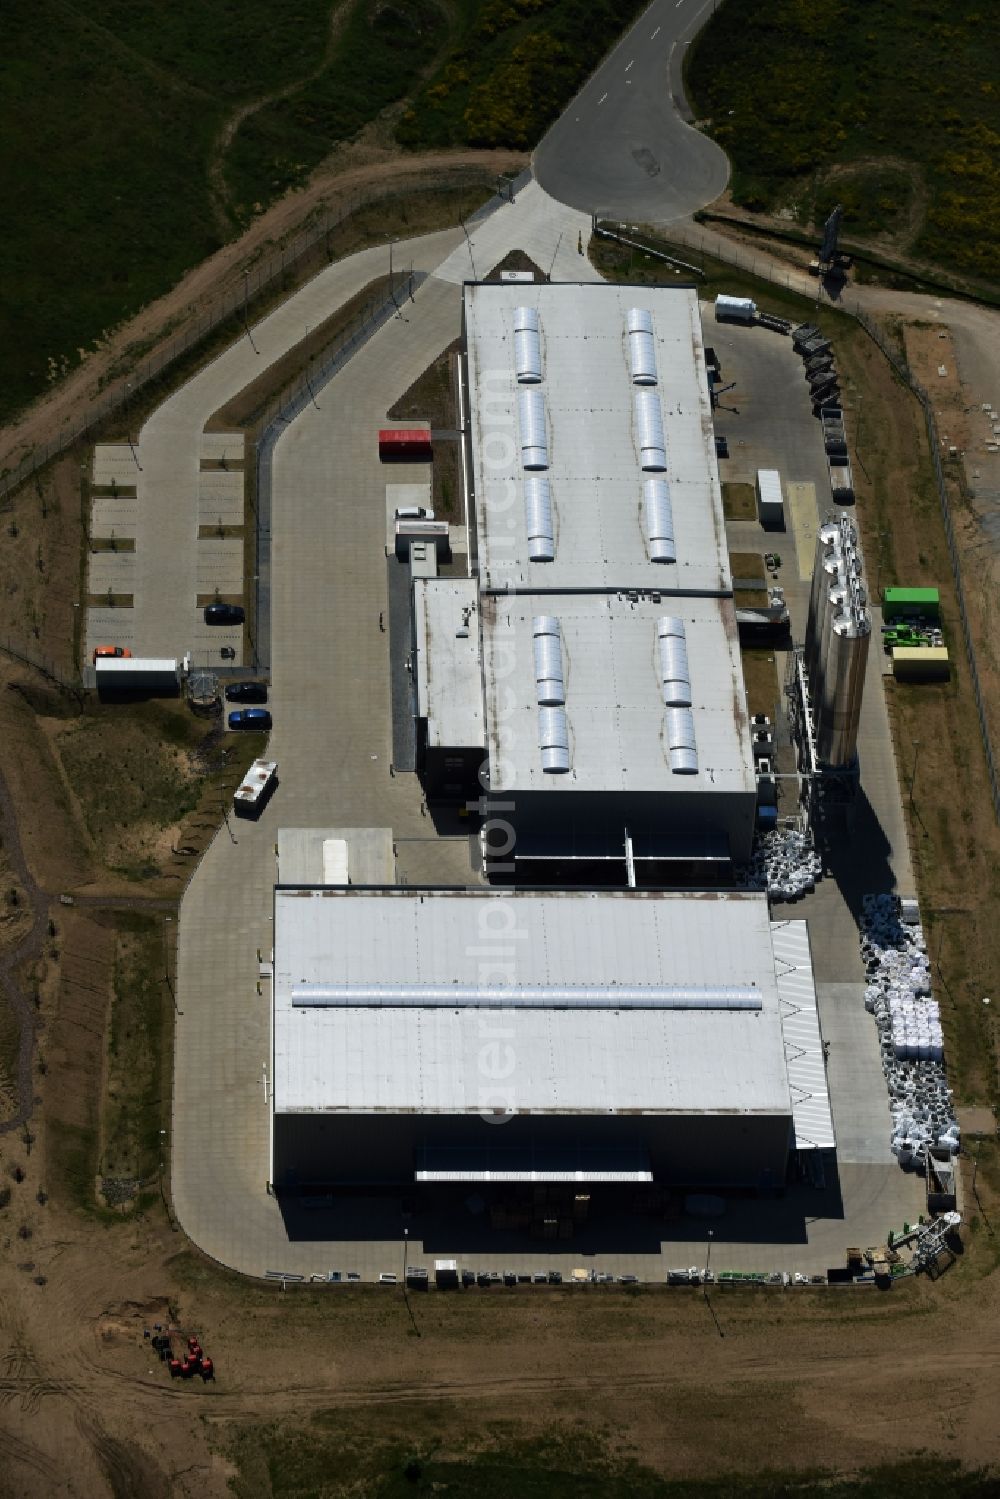 Aerial image Schwerin - Production plant of CVP Clean Value Plastics GmbH in the industrial park in Schwerin in Mecklenburg-Western Pomerania